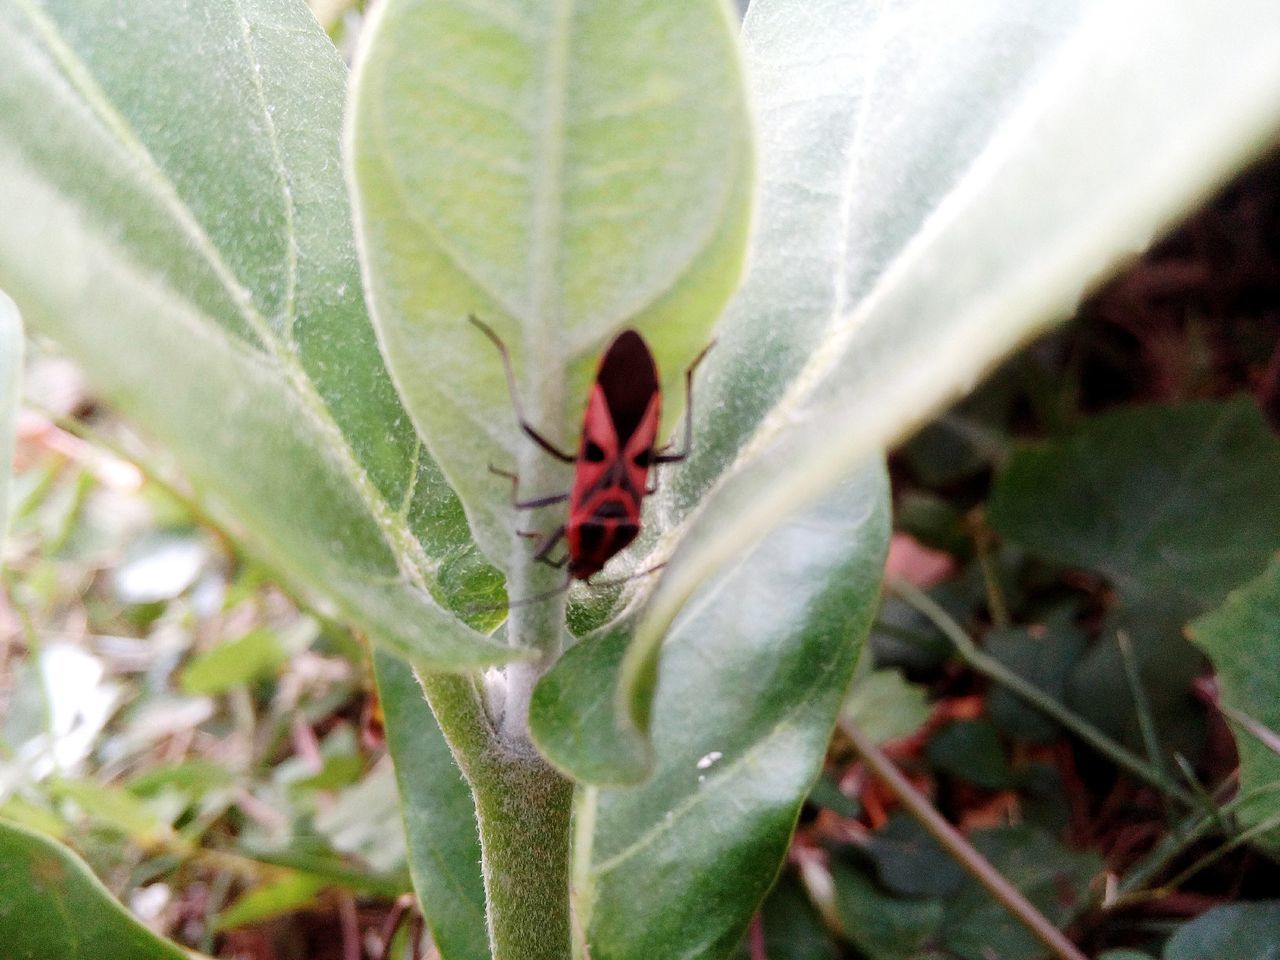 Bug on the leaf.